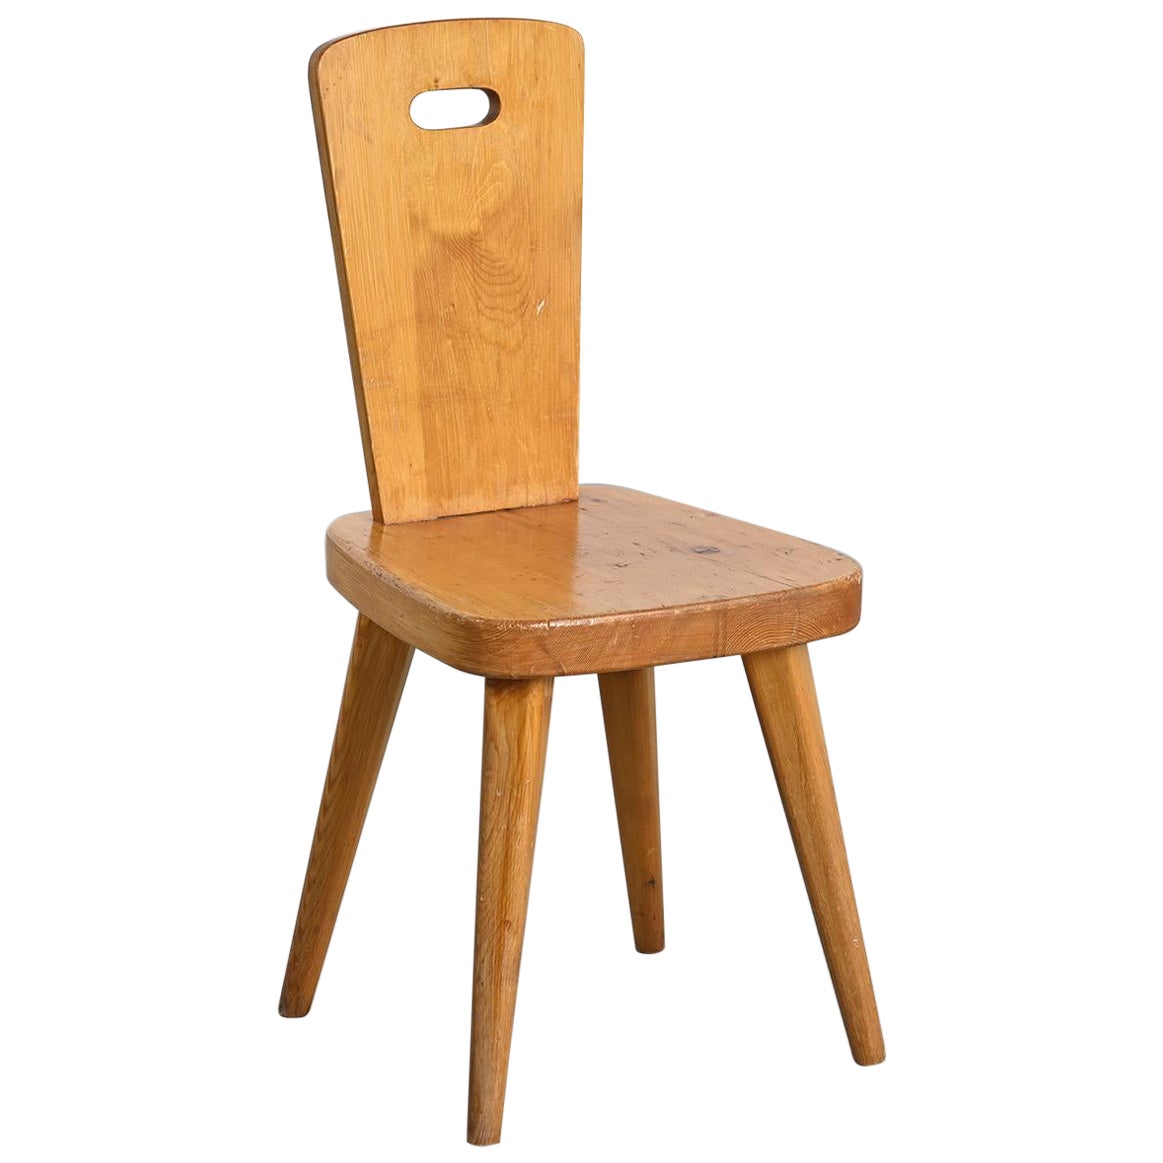 Chair by Christian Durupt, Meribel 1960